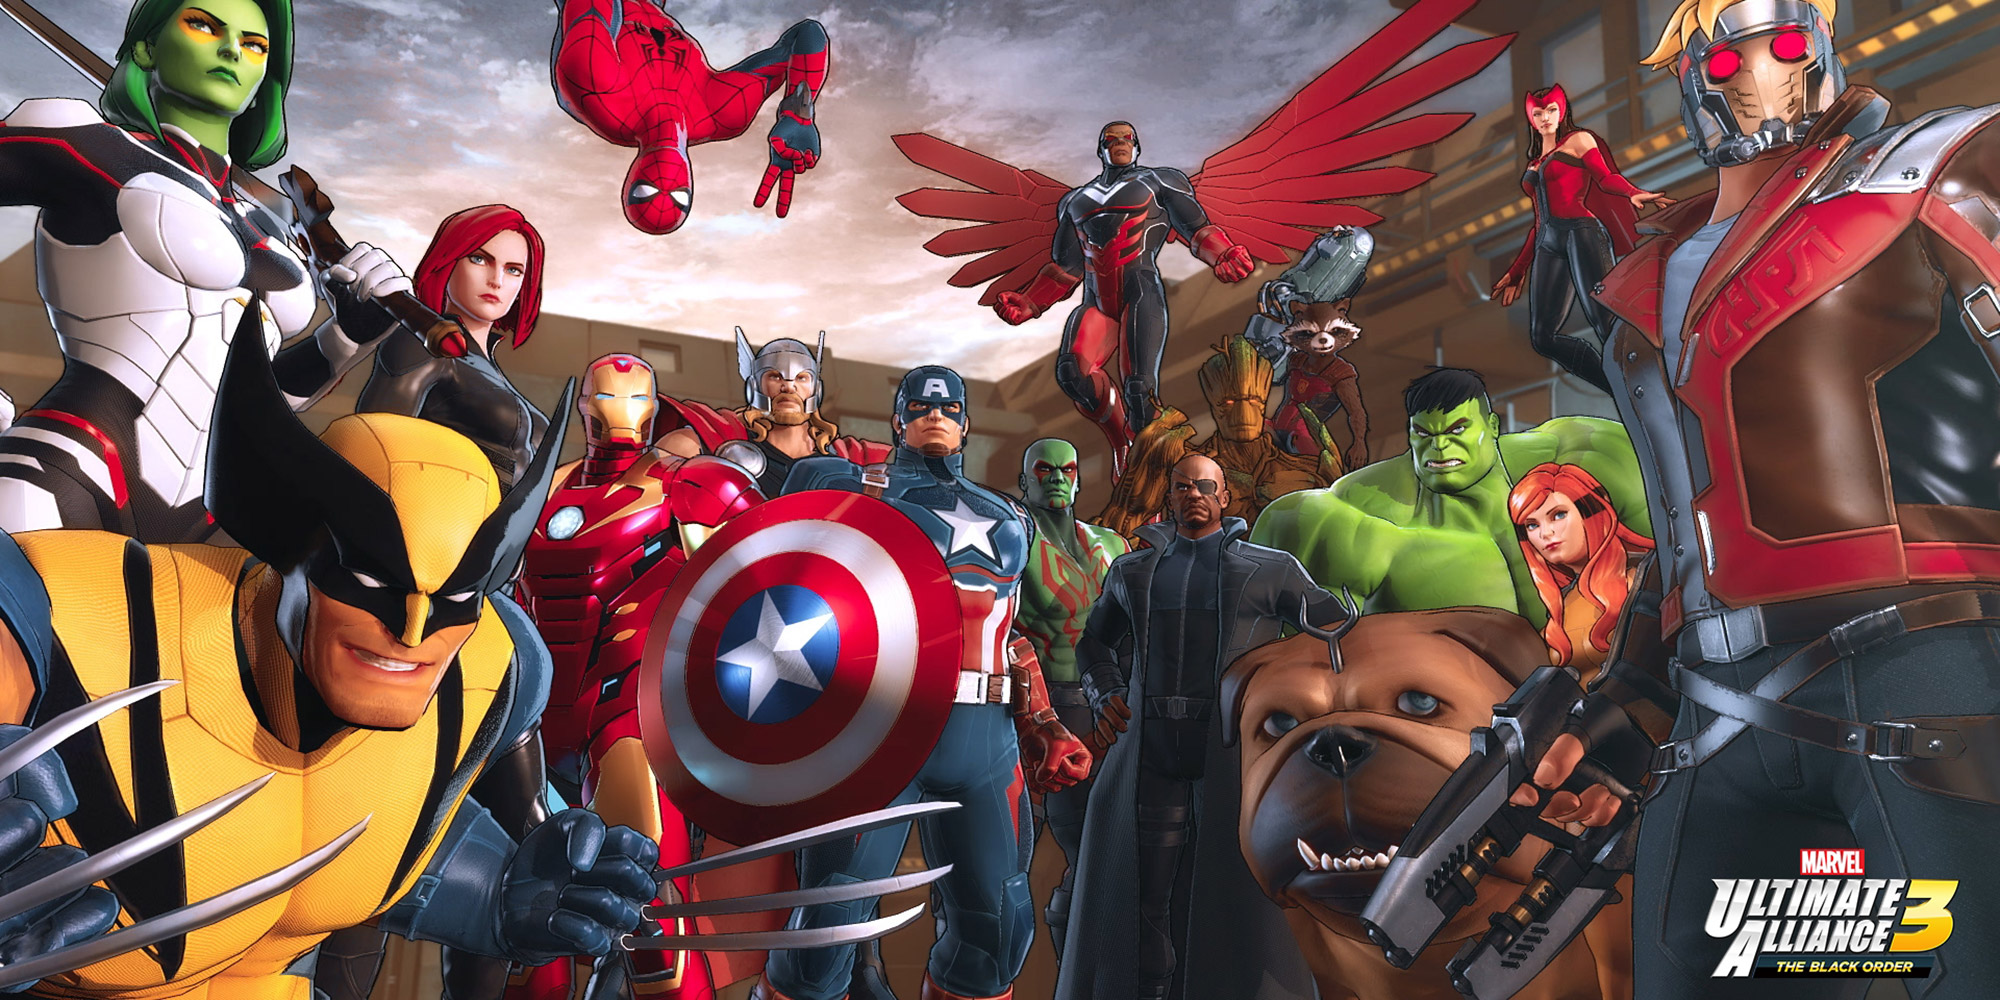  Marvel Ultimate Alliance 3 en exclu sur Switch !